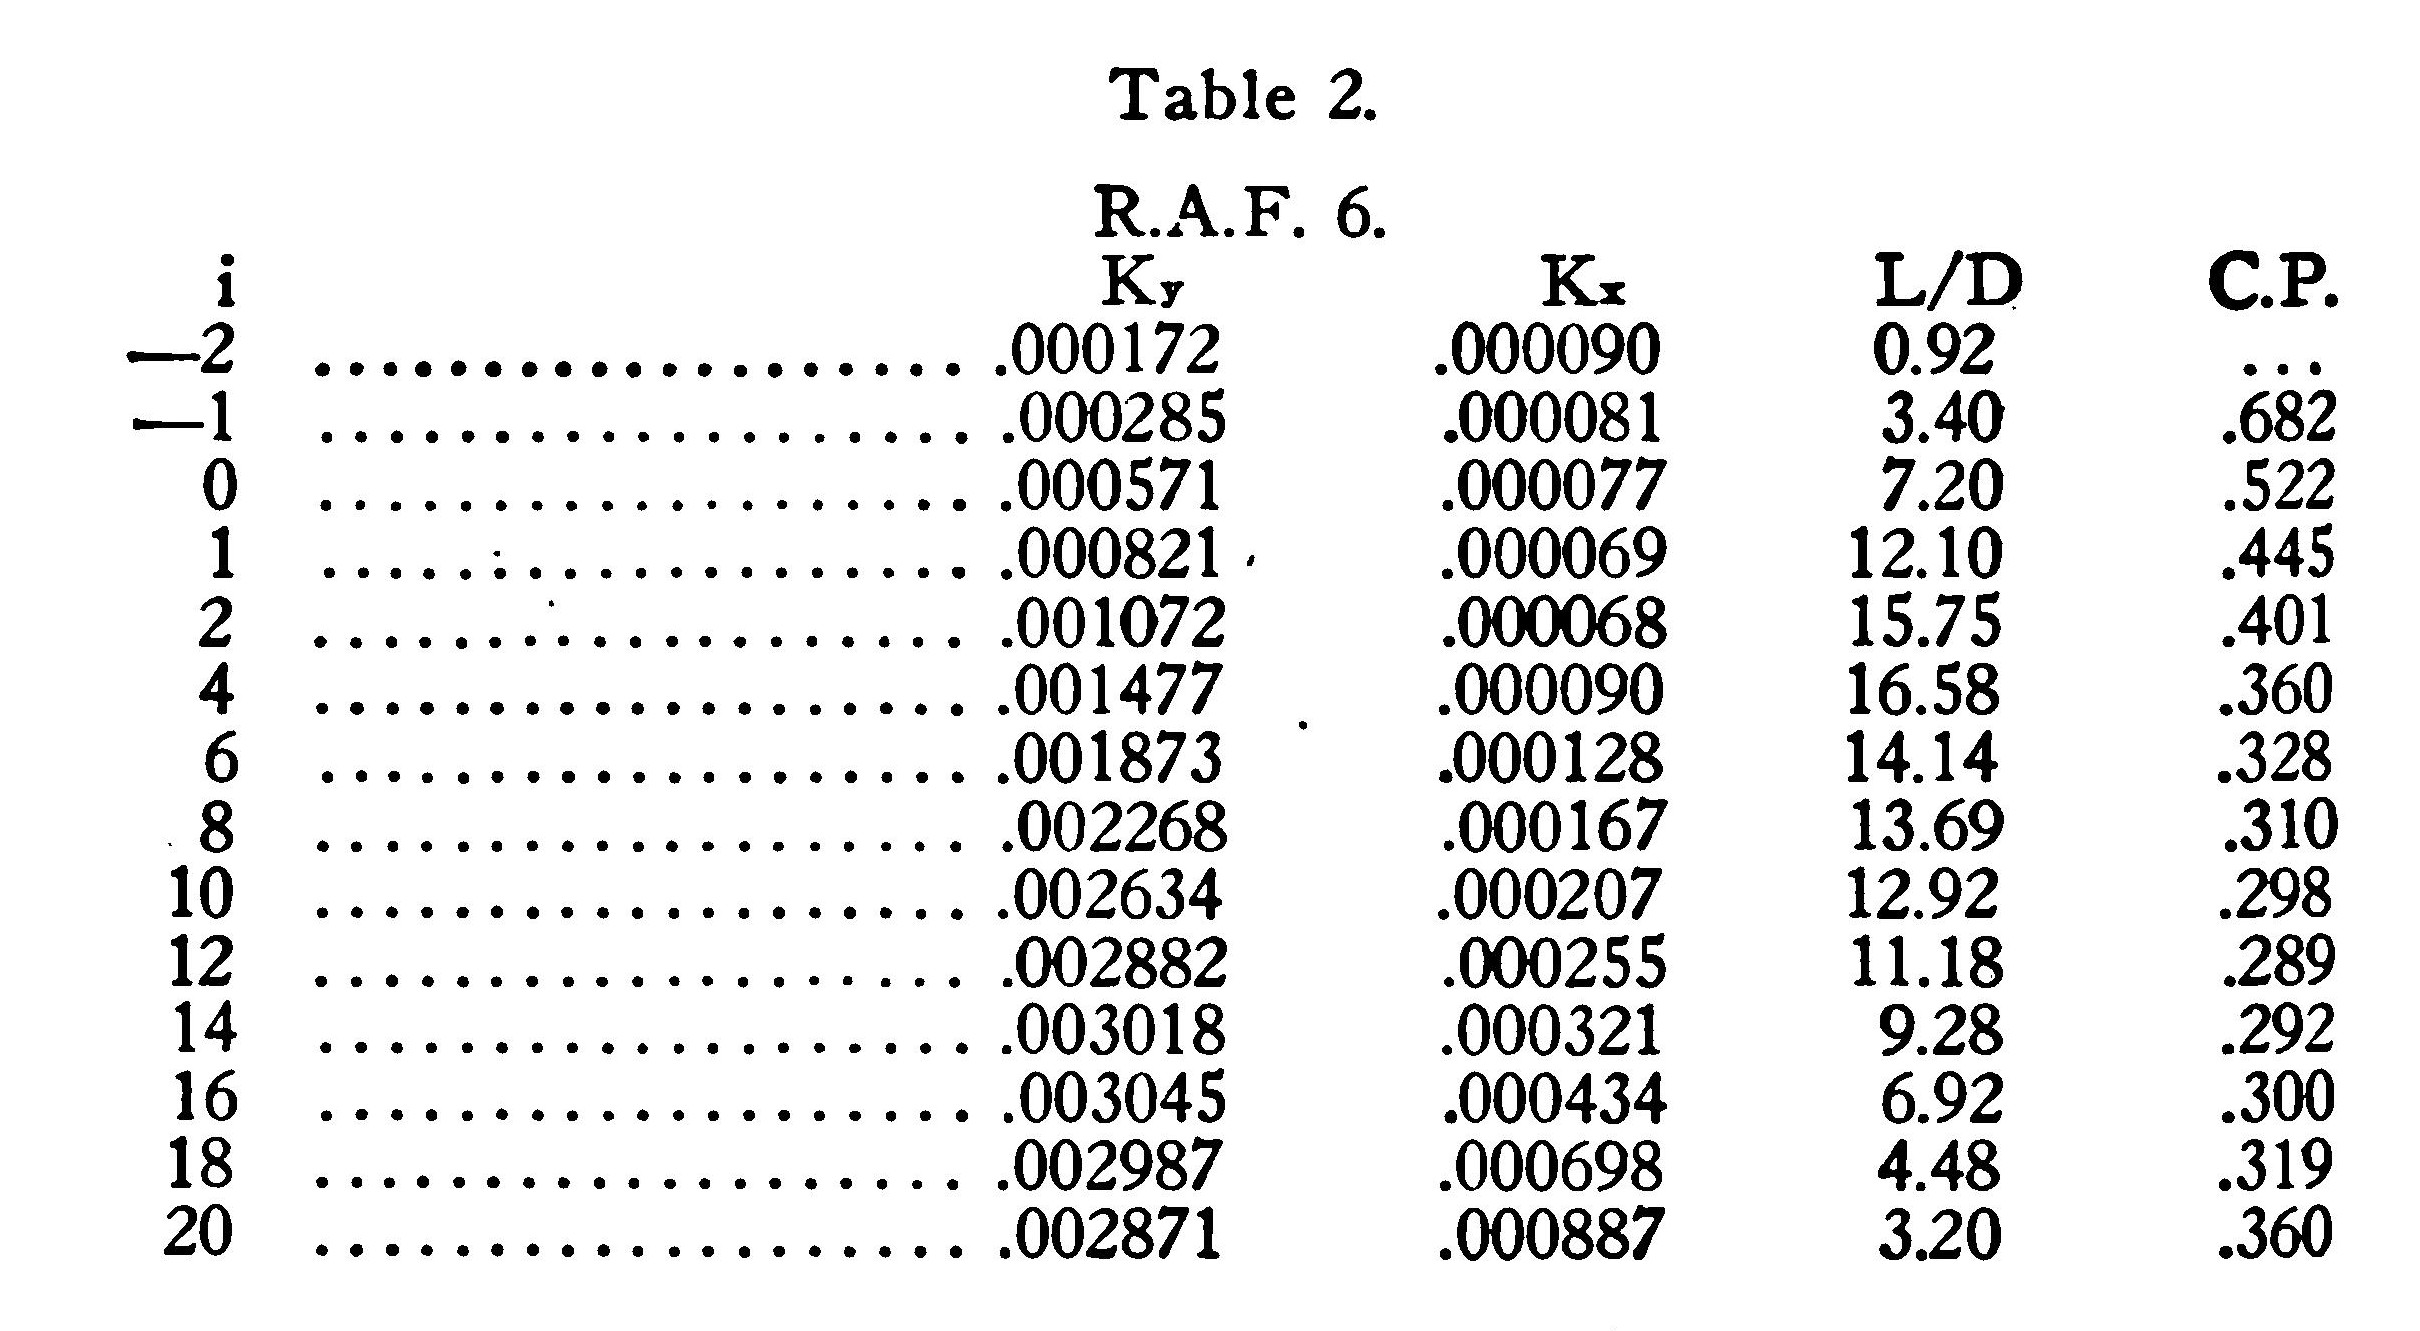 Table 2. R.A.F. 6